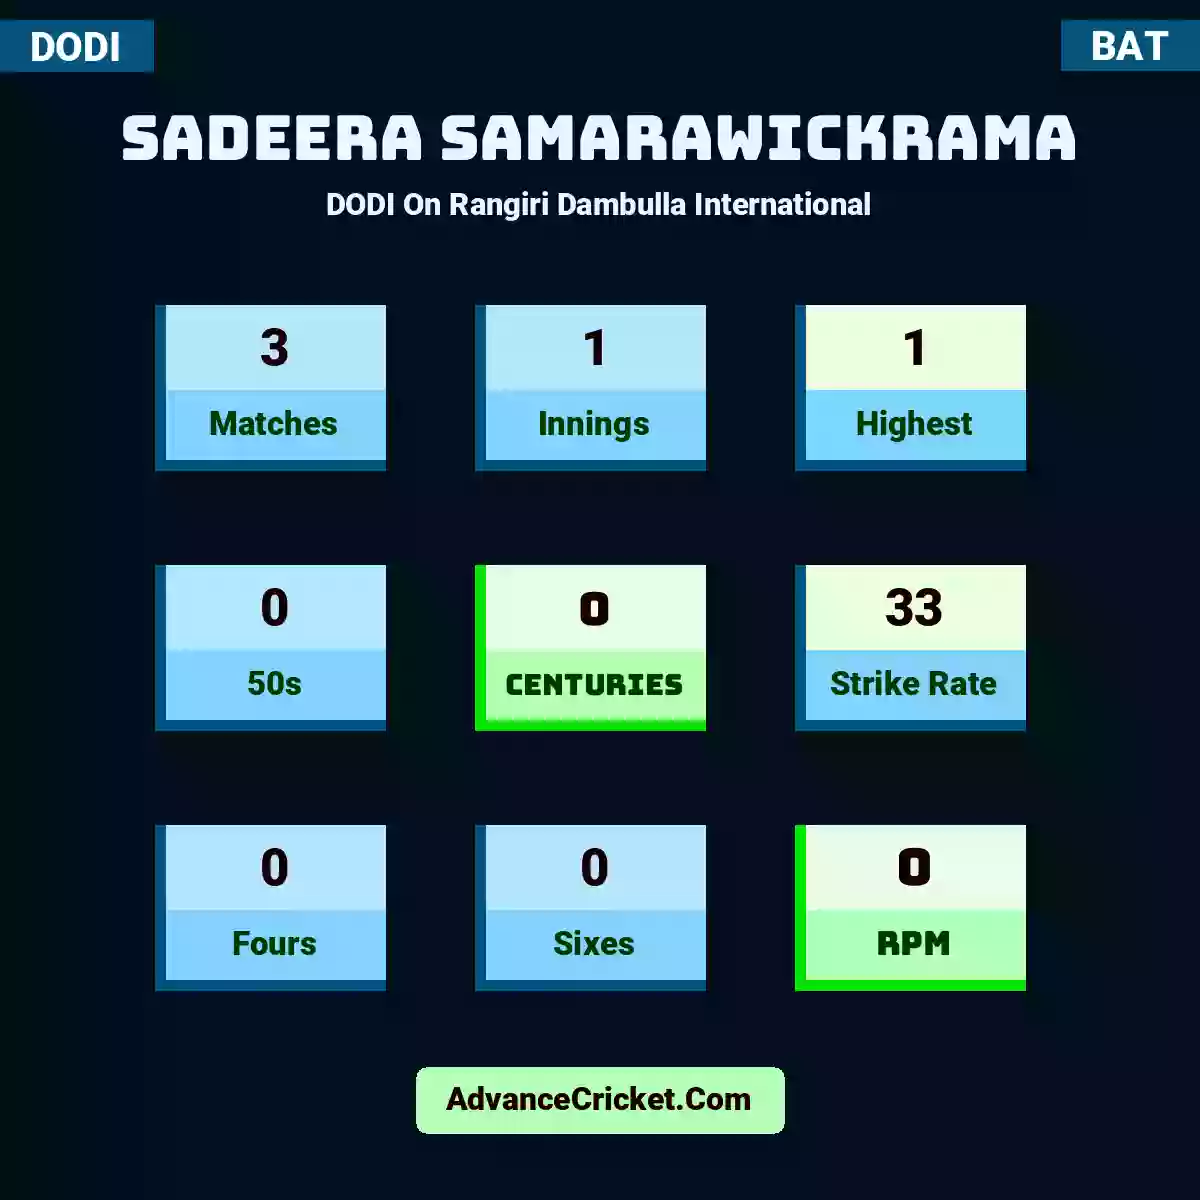 Sadeera Samarawickrama DODI  On Rangiri Dambulla International, Sadeera Samarawickrama played 3 matches, scored 1 runs as highest, 0 half-centuries, and 0 centuries, with a strike rate of 33. S.Samarawickrama hit 0 fours and 0 sixes, with an RPM of 0.